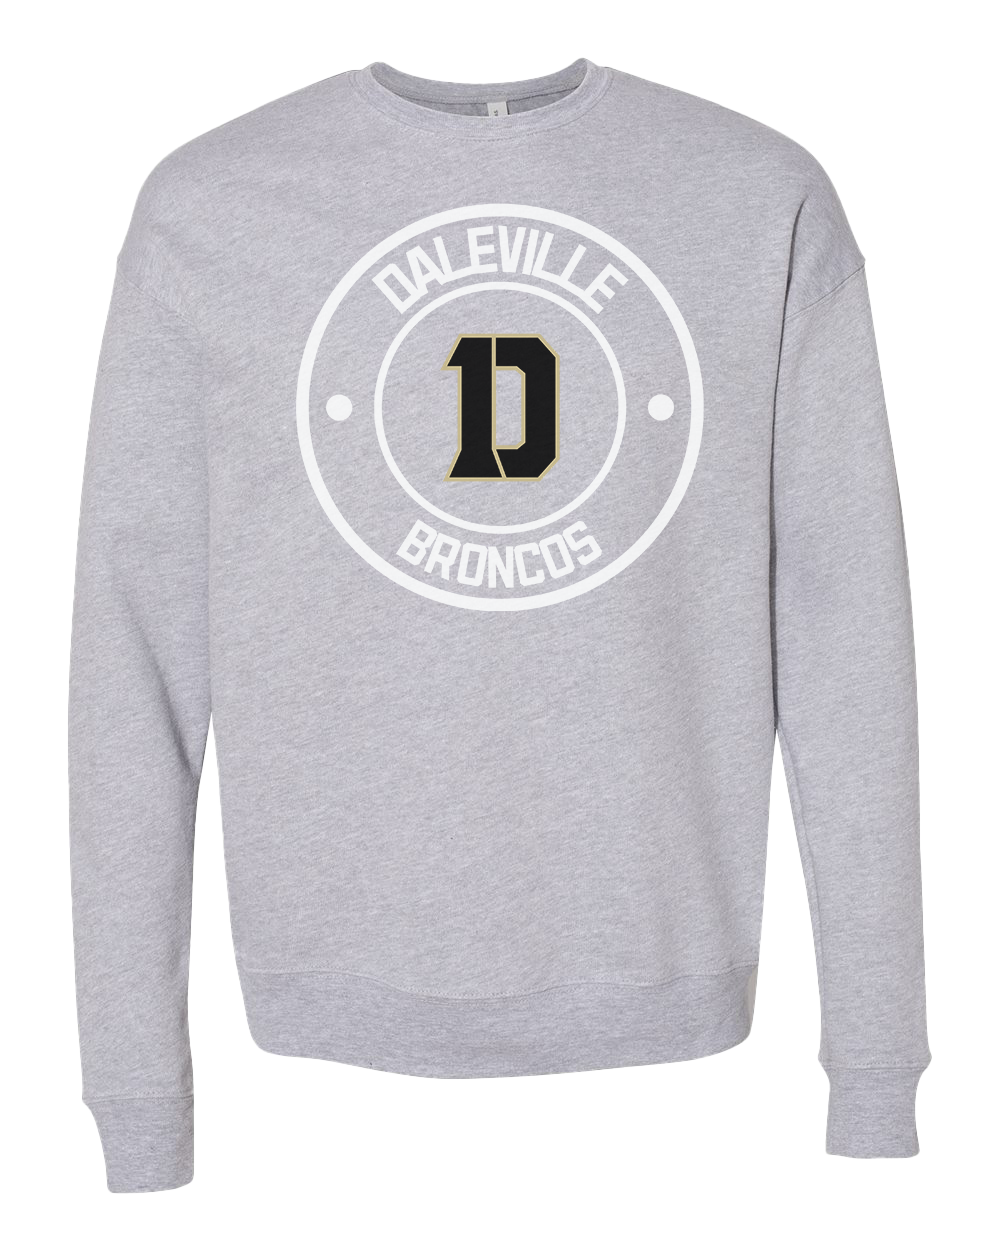 Daleville Broncos Round Logo Crew Sweatshirt - Athletic Heather